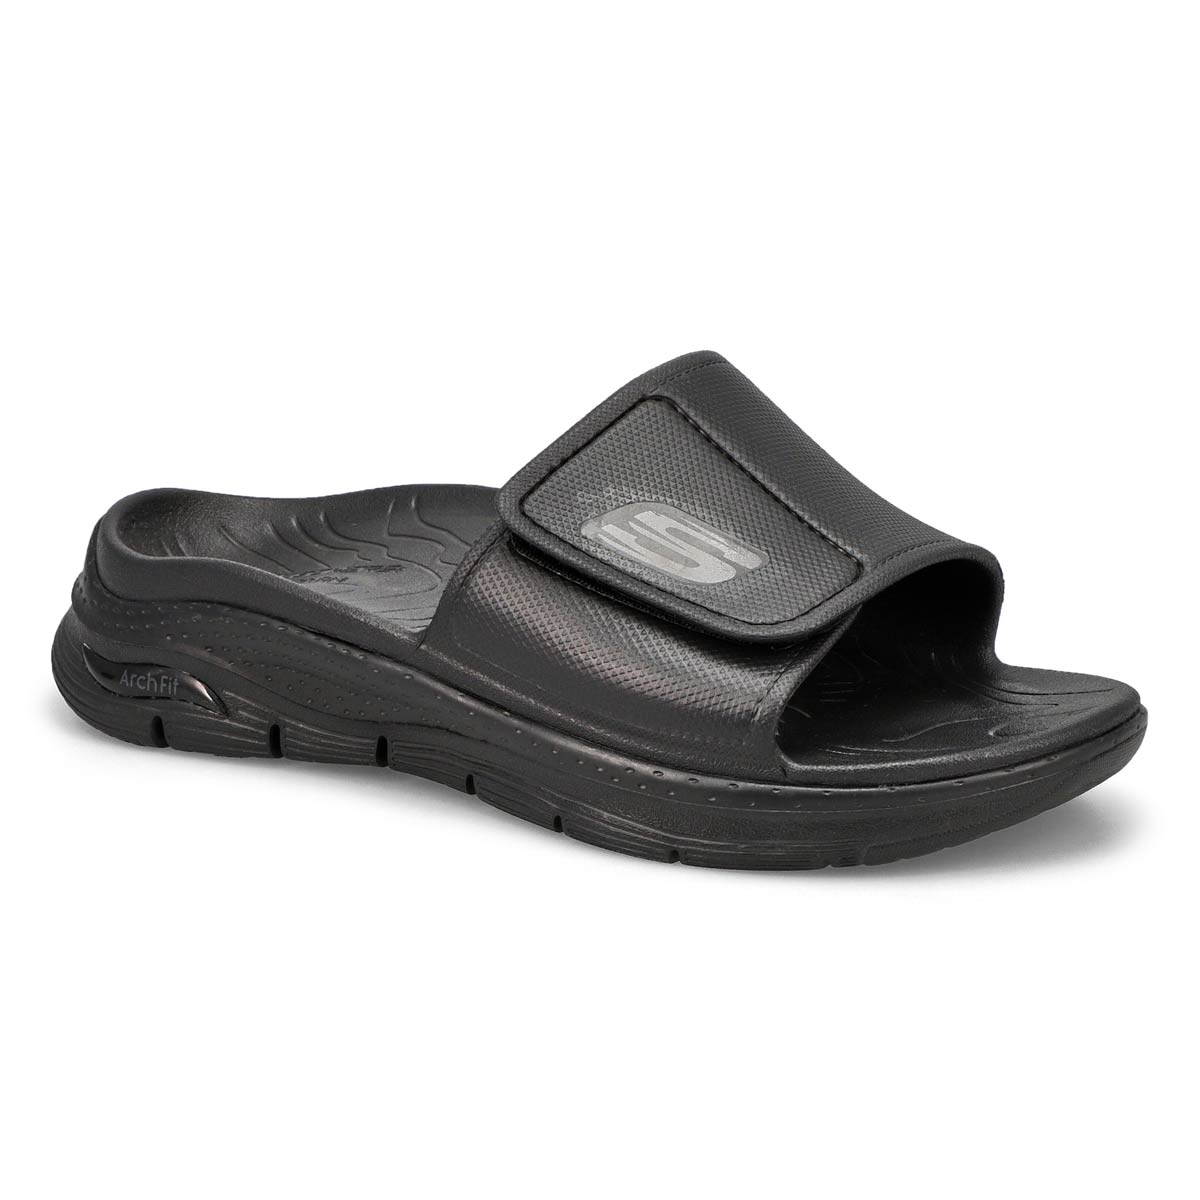 Skechers Mens' Arch Fit Slide Sandal - Black/ | SoftMoc.com